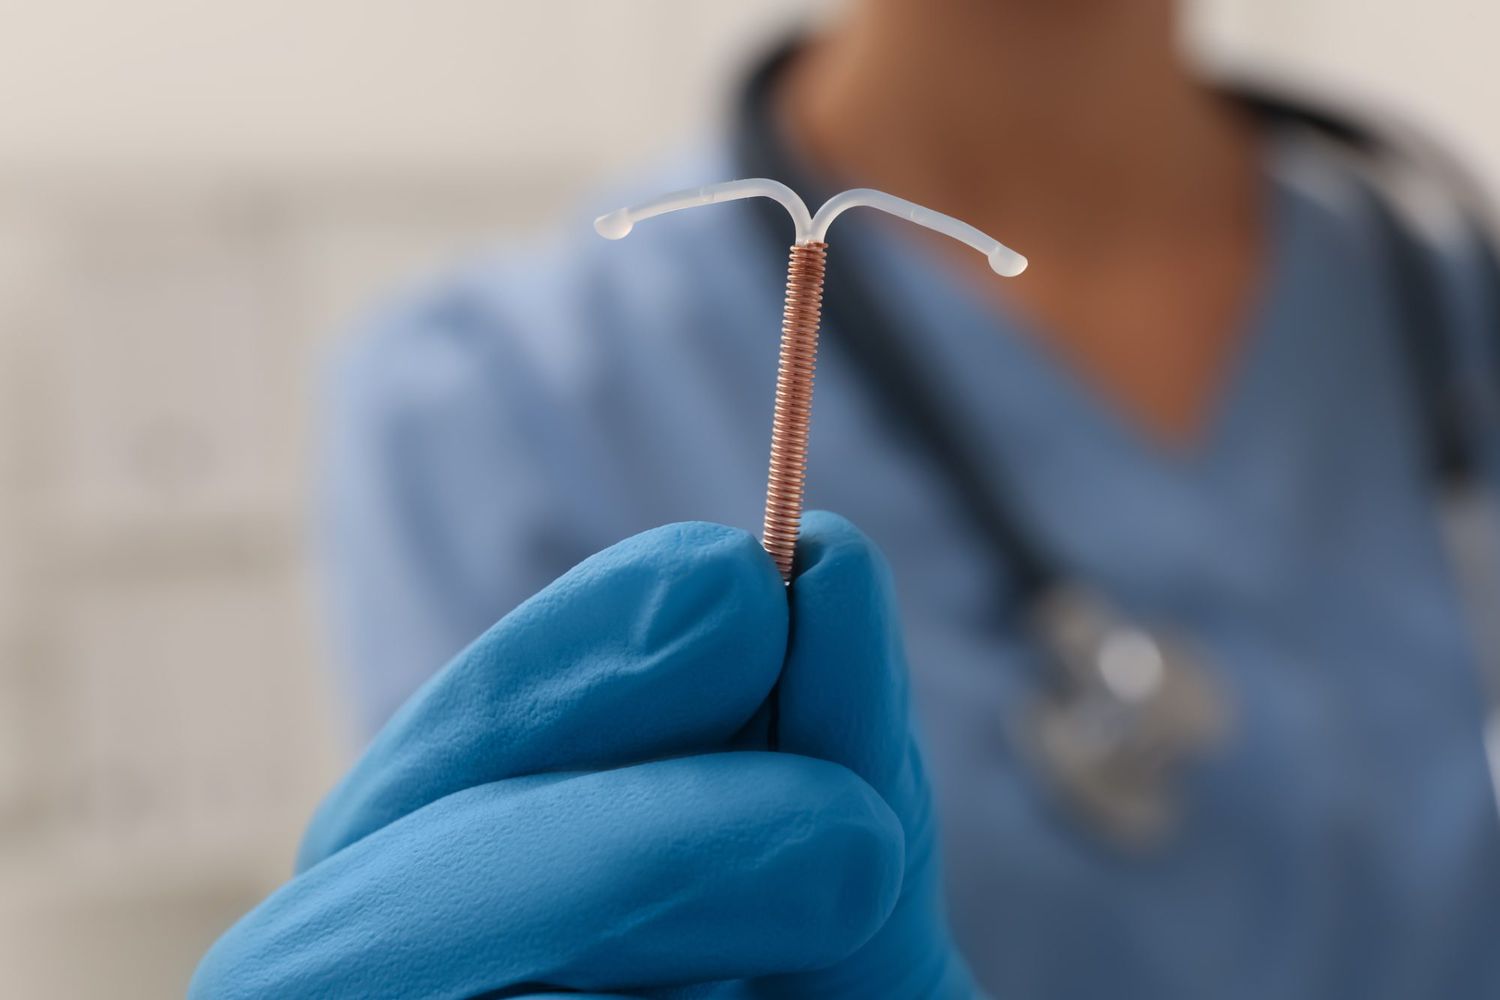 hormonal intrauterine device (IUD)